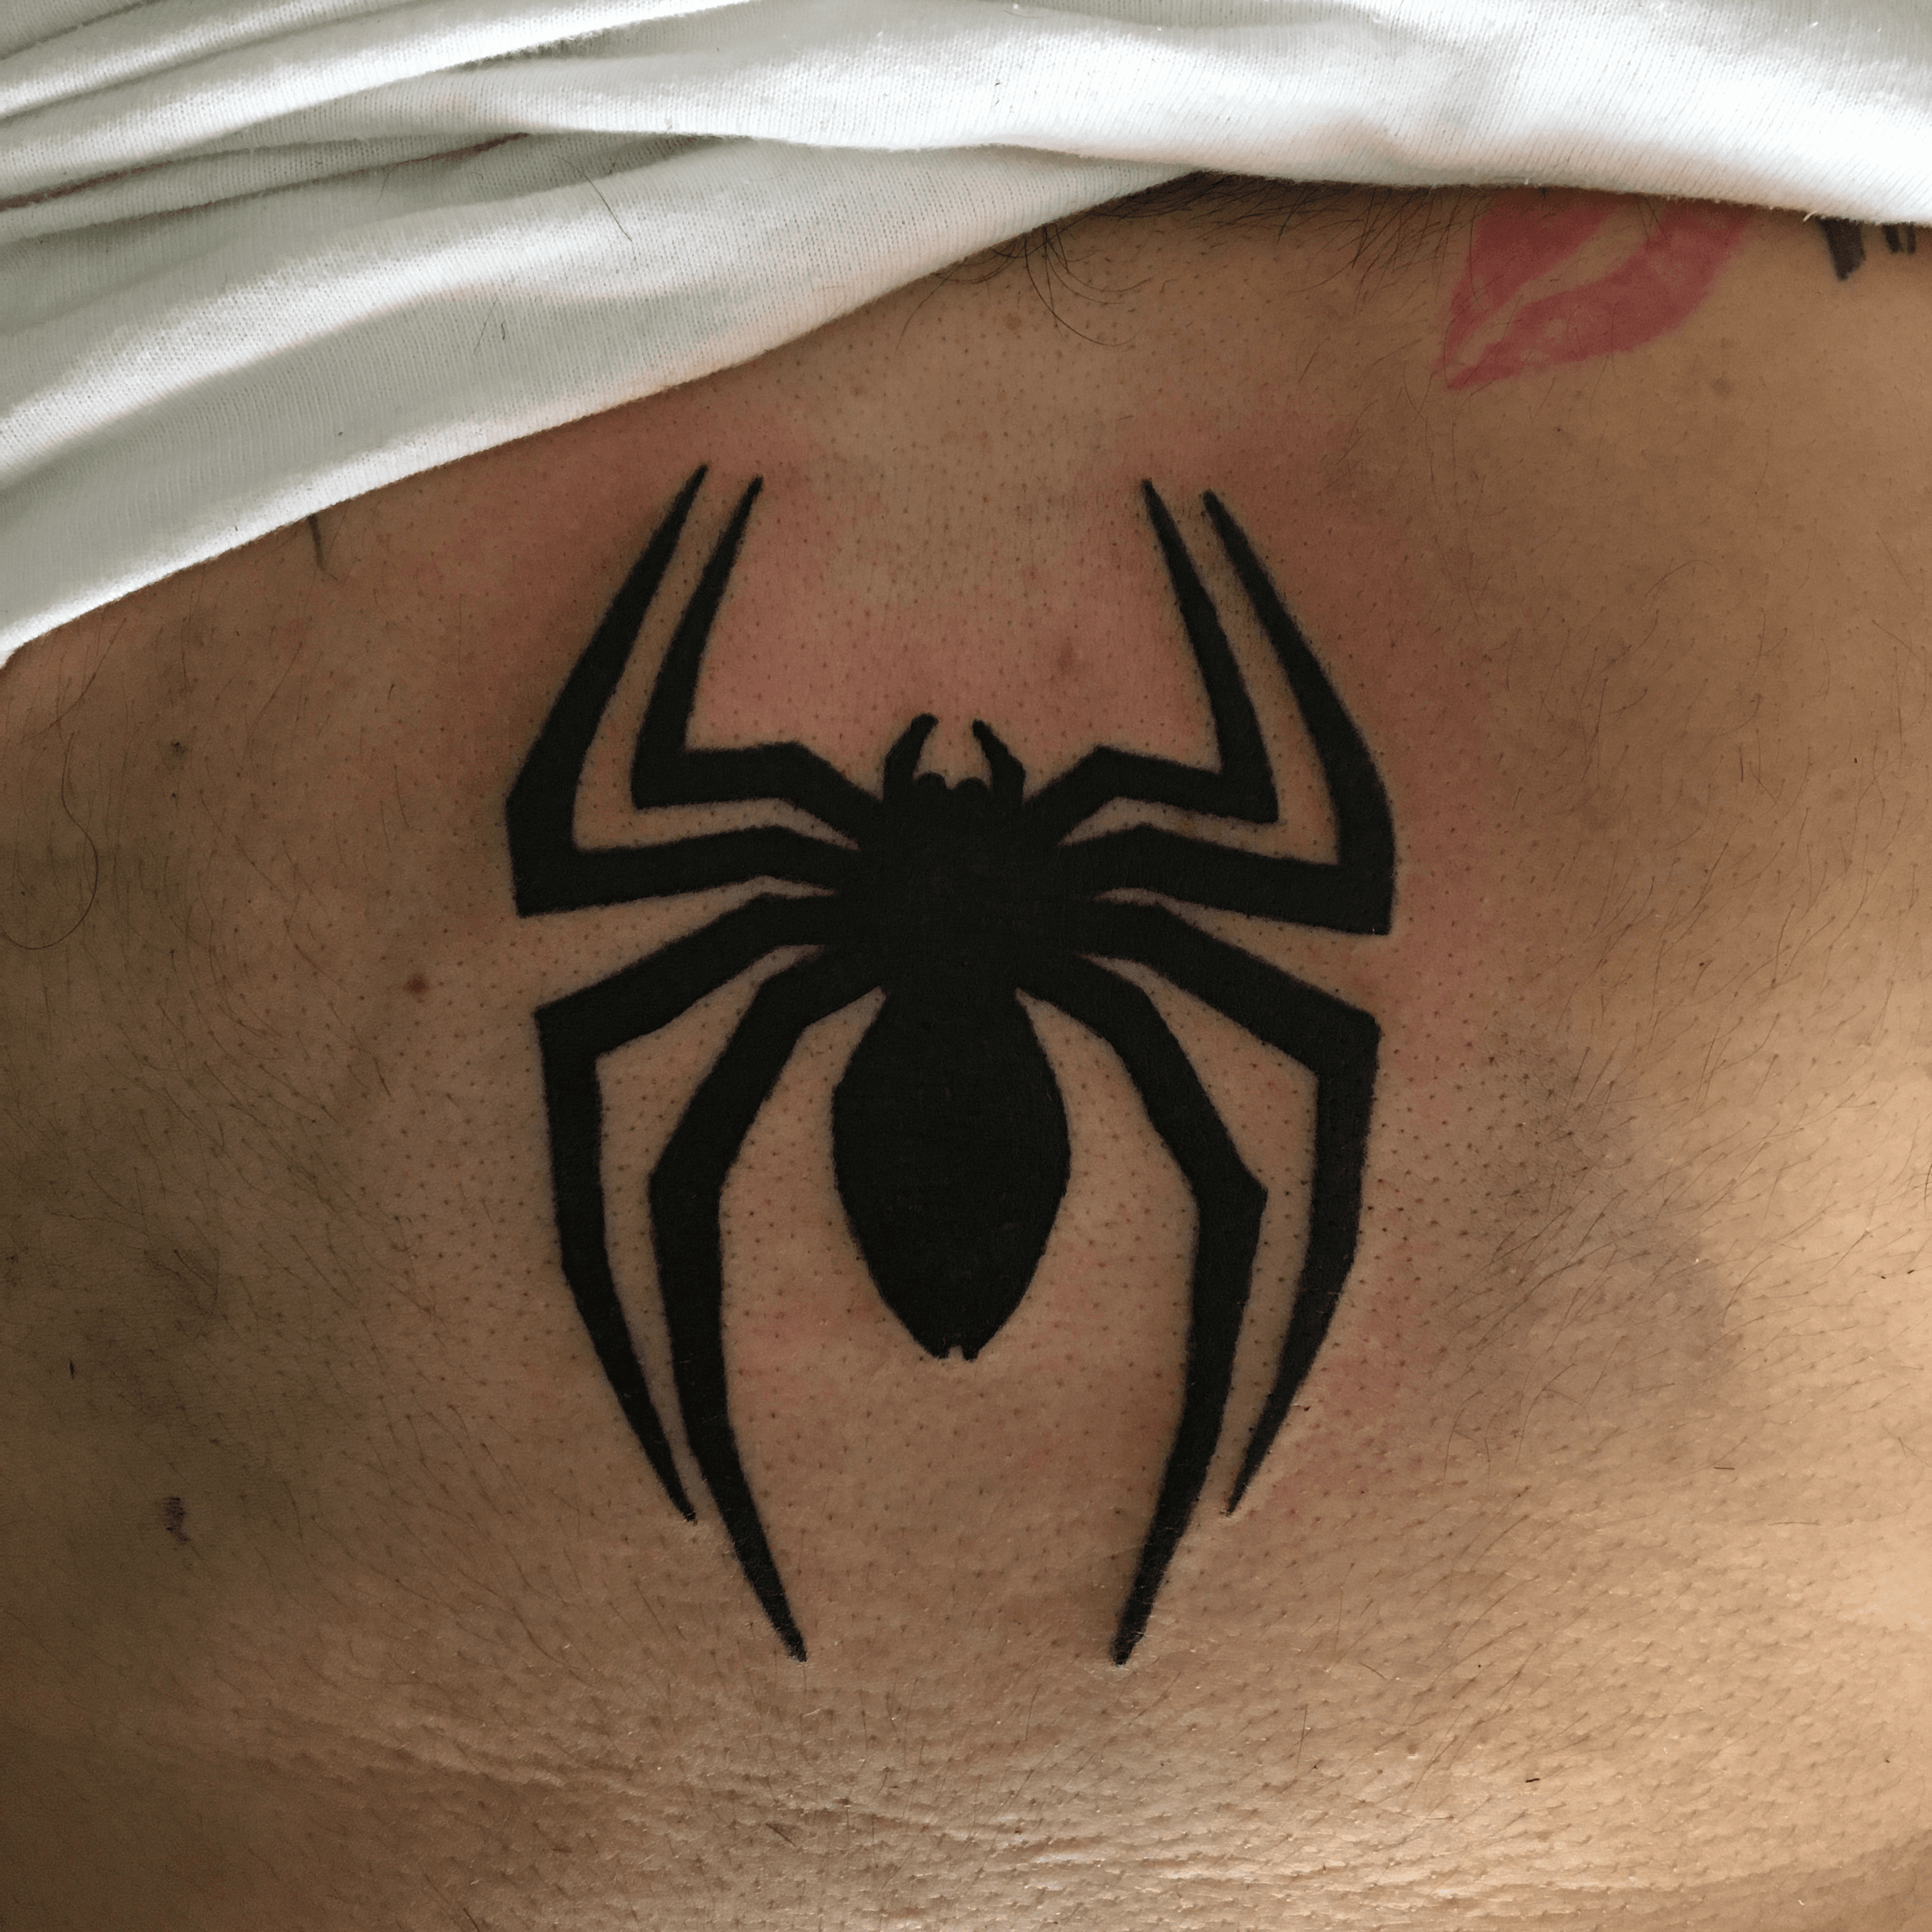 SpiderMan Tattoo by MWattsArt on DeviantArt